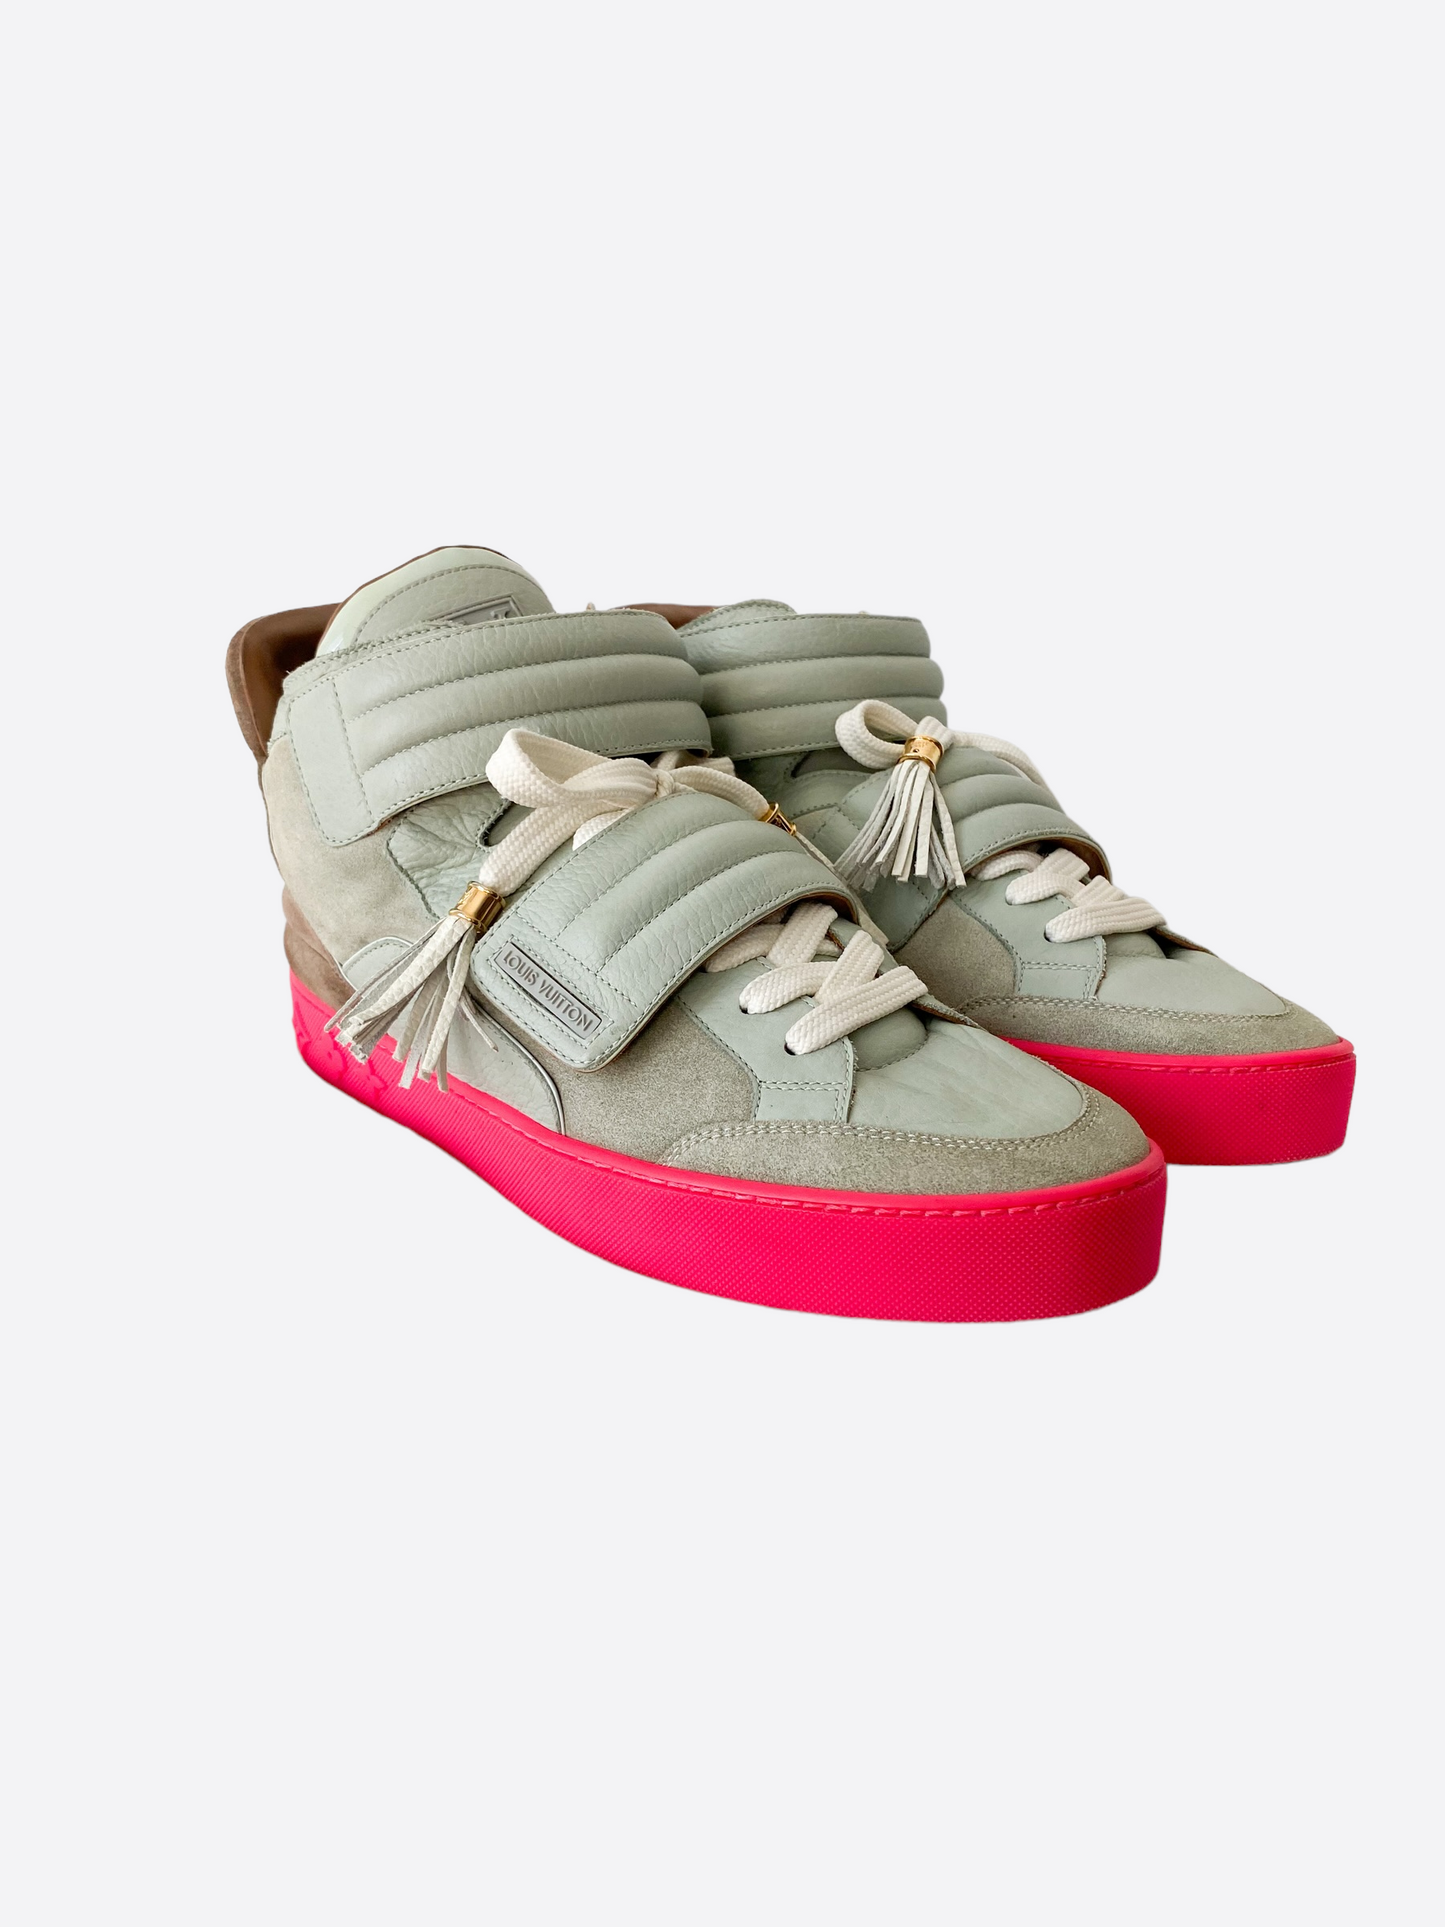 LOUIS VUITTON X Kanye West Jaspers Grey/Pink $3,700.00 - PicClick